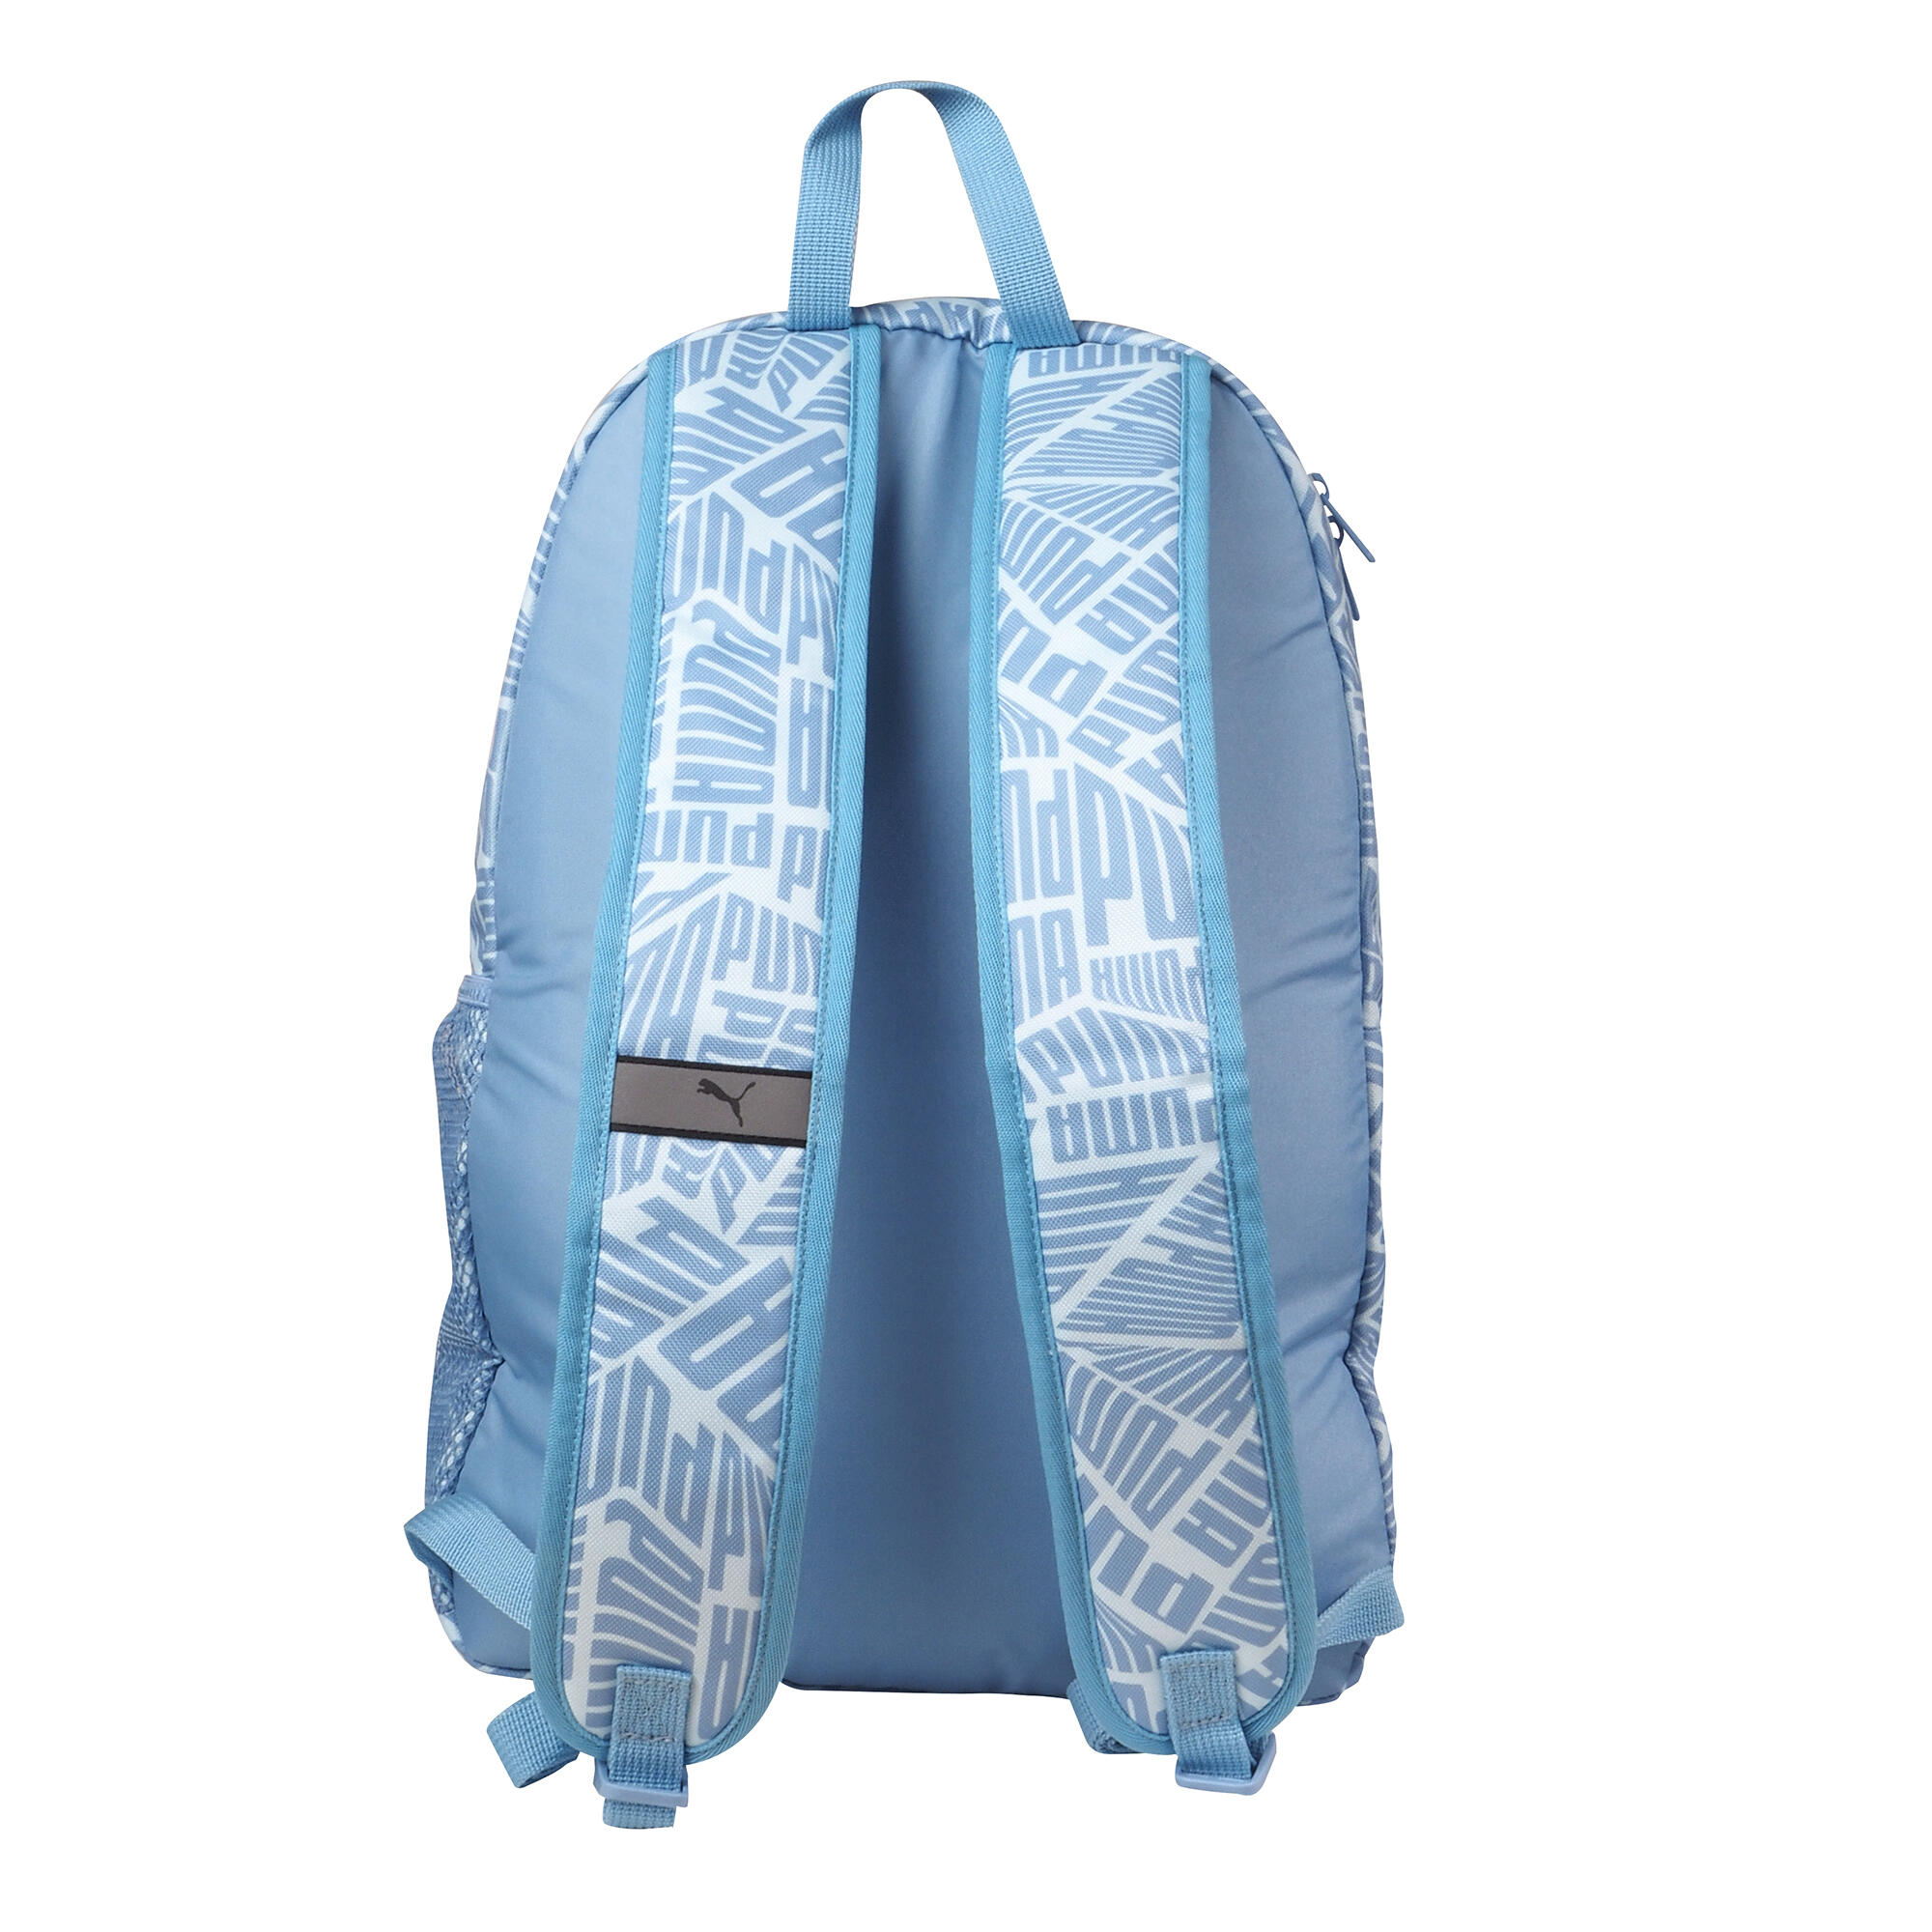 Backpack Phase - Blue 2/7